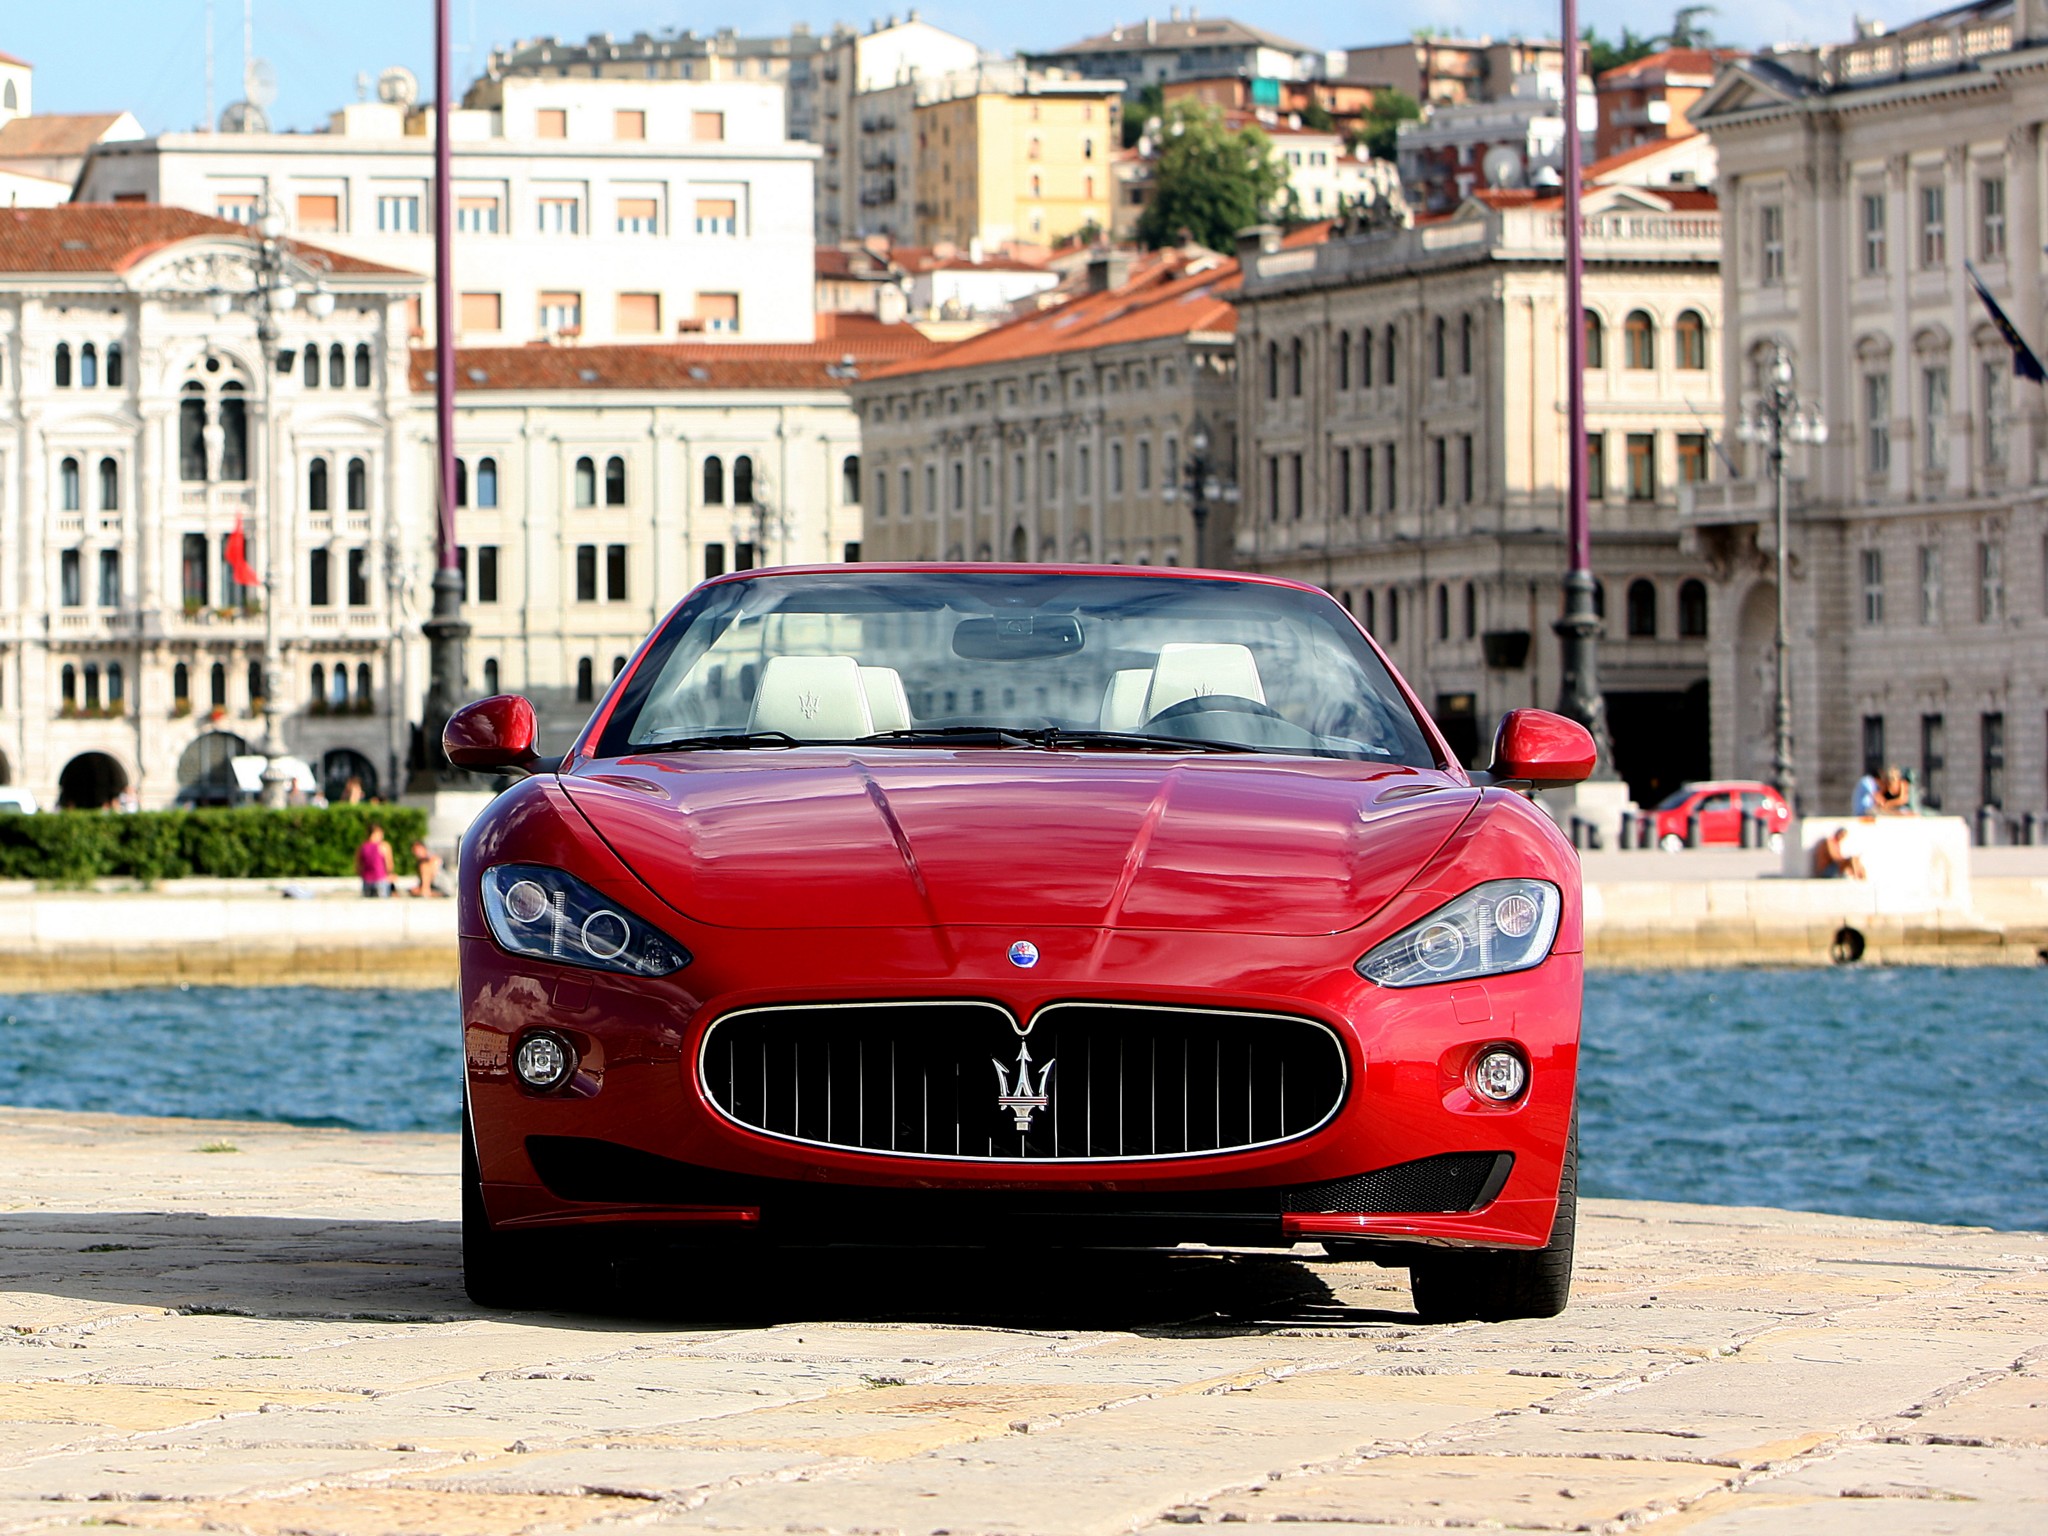 Maserati 2 door sports car